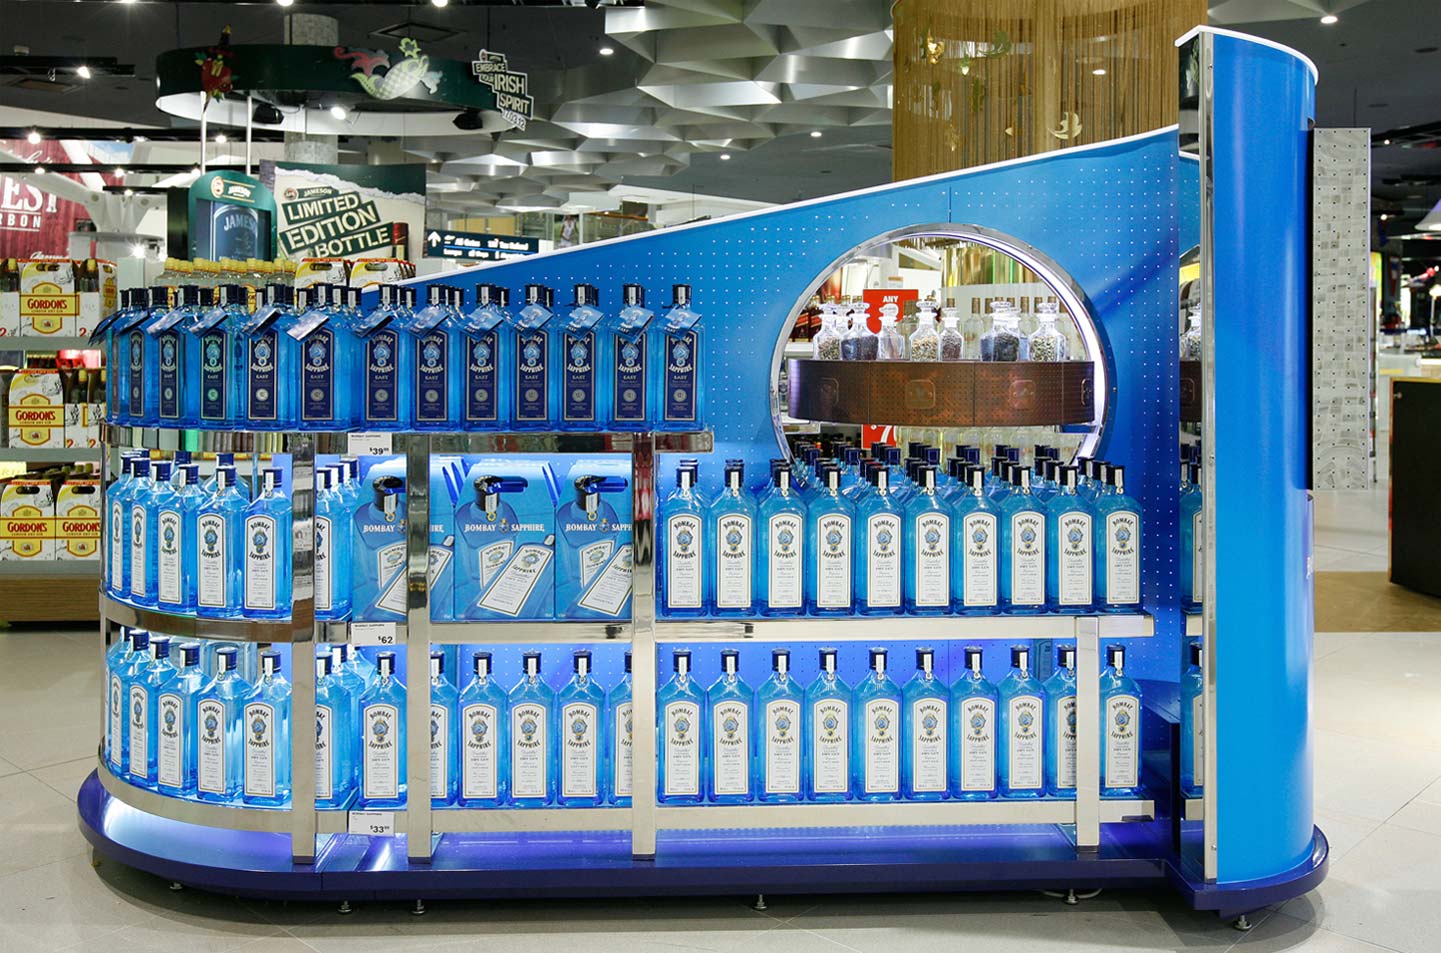 Innovative Bombay Sapphire visual merchandising display Sydney Airport designed by CampbellRigg